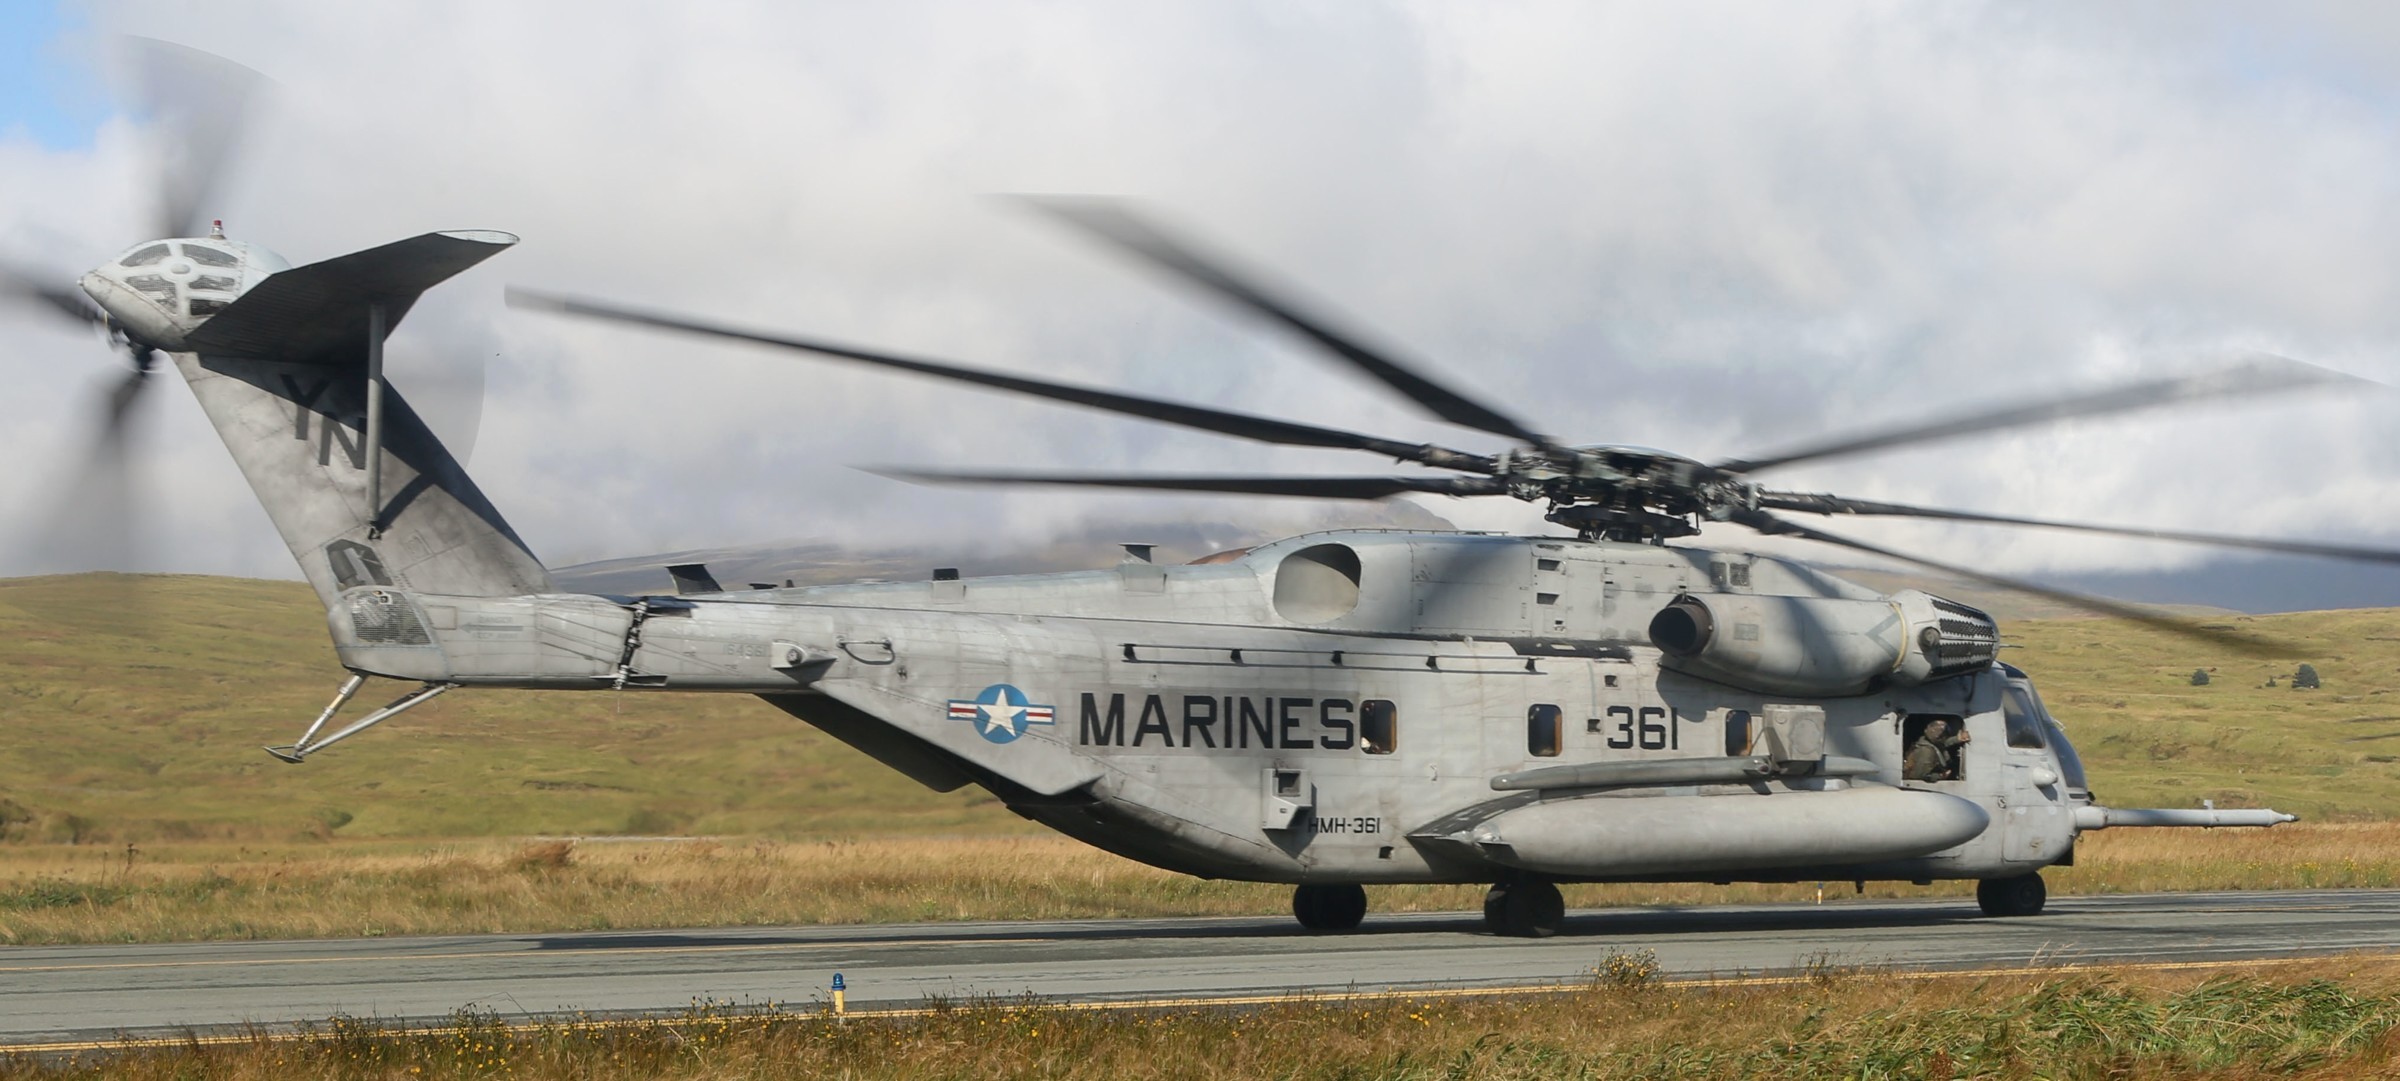 hmh-361 flying tigers marine heavy helicopter squadron usmc sikorsky ch-53e super stallion 55 adak alaska